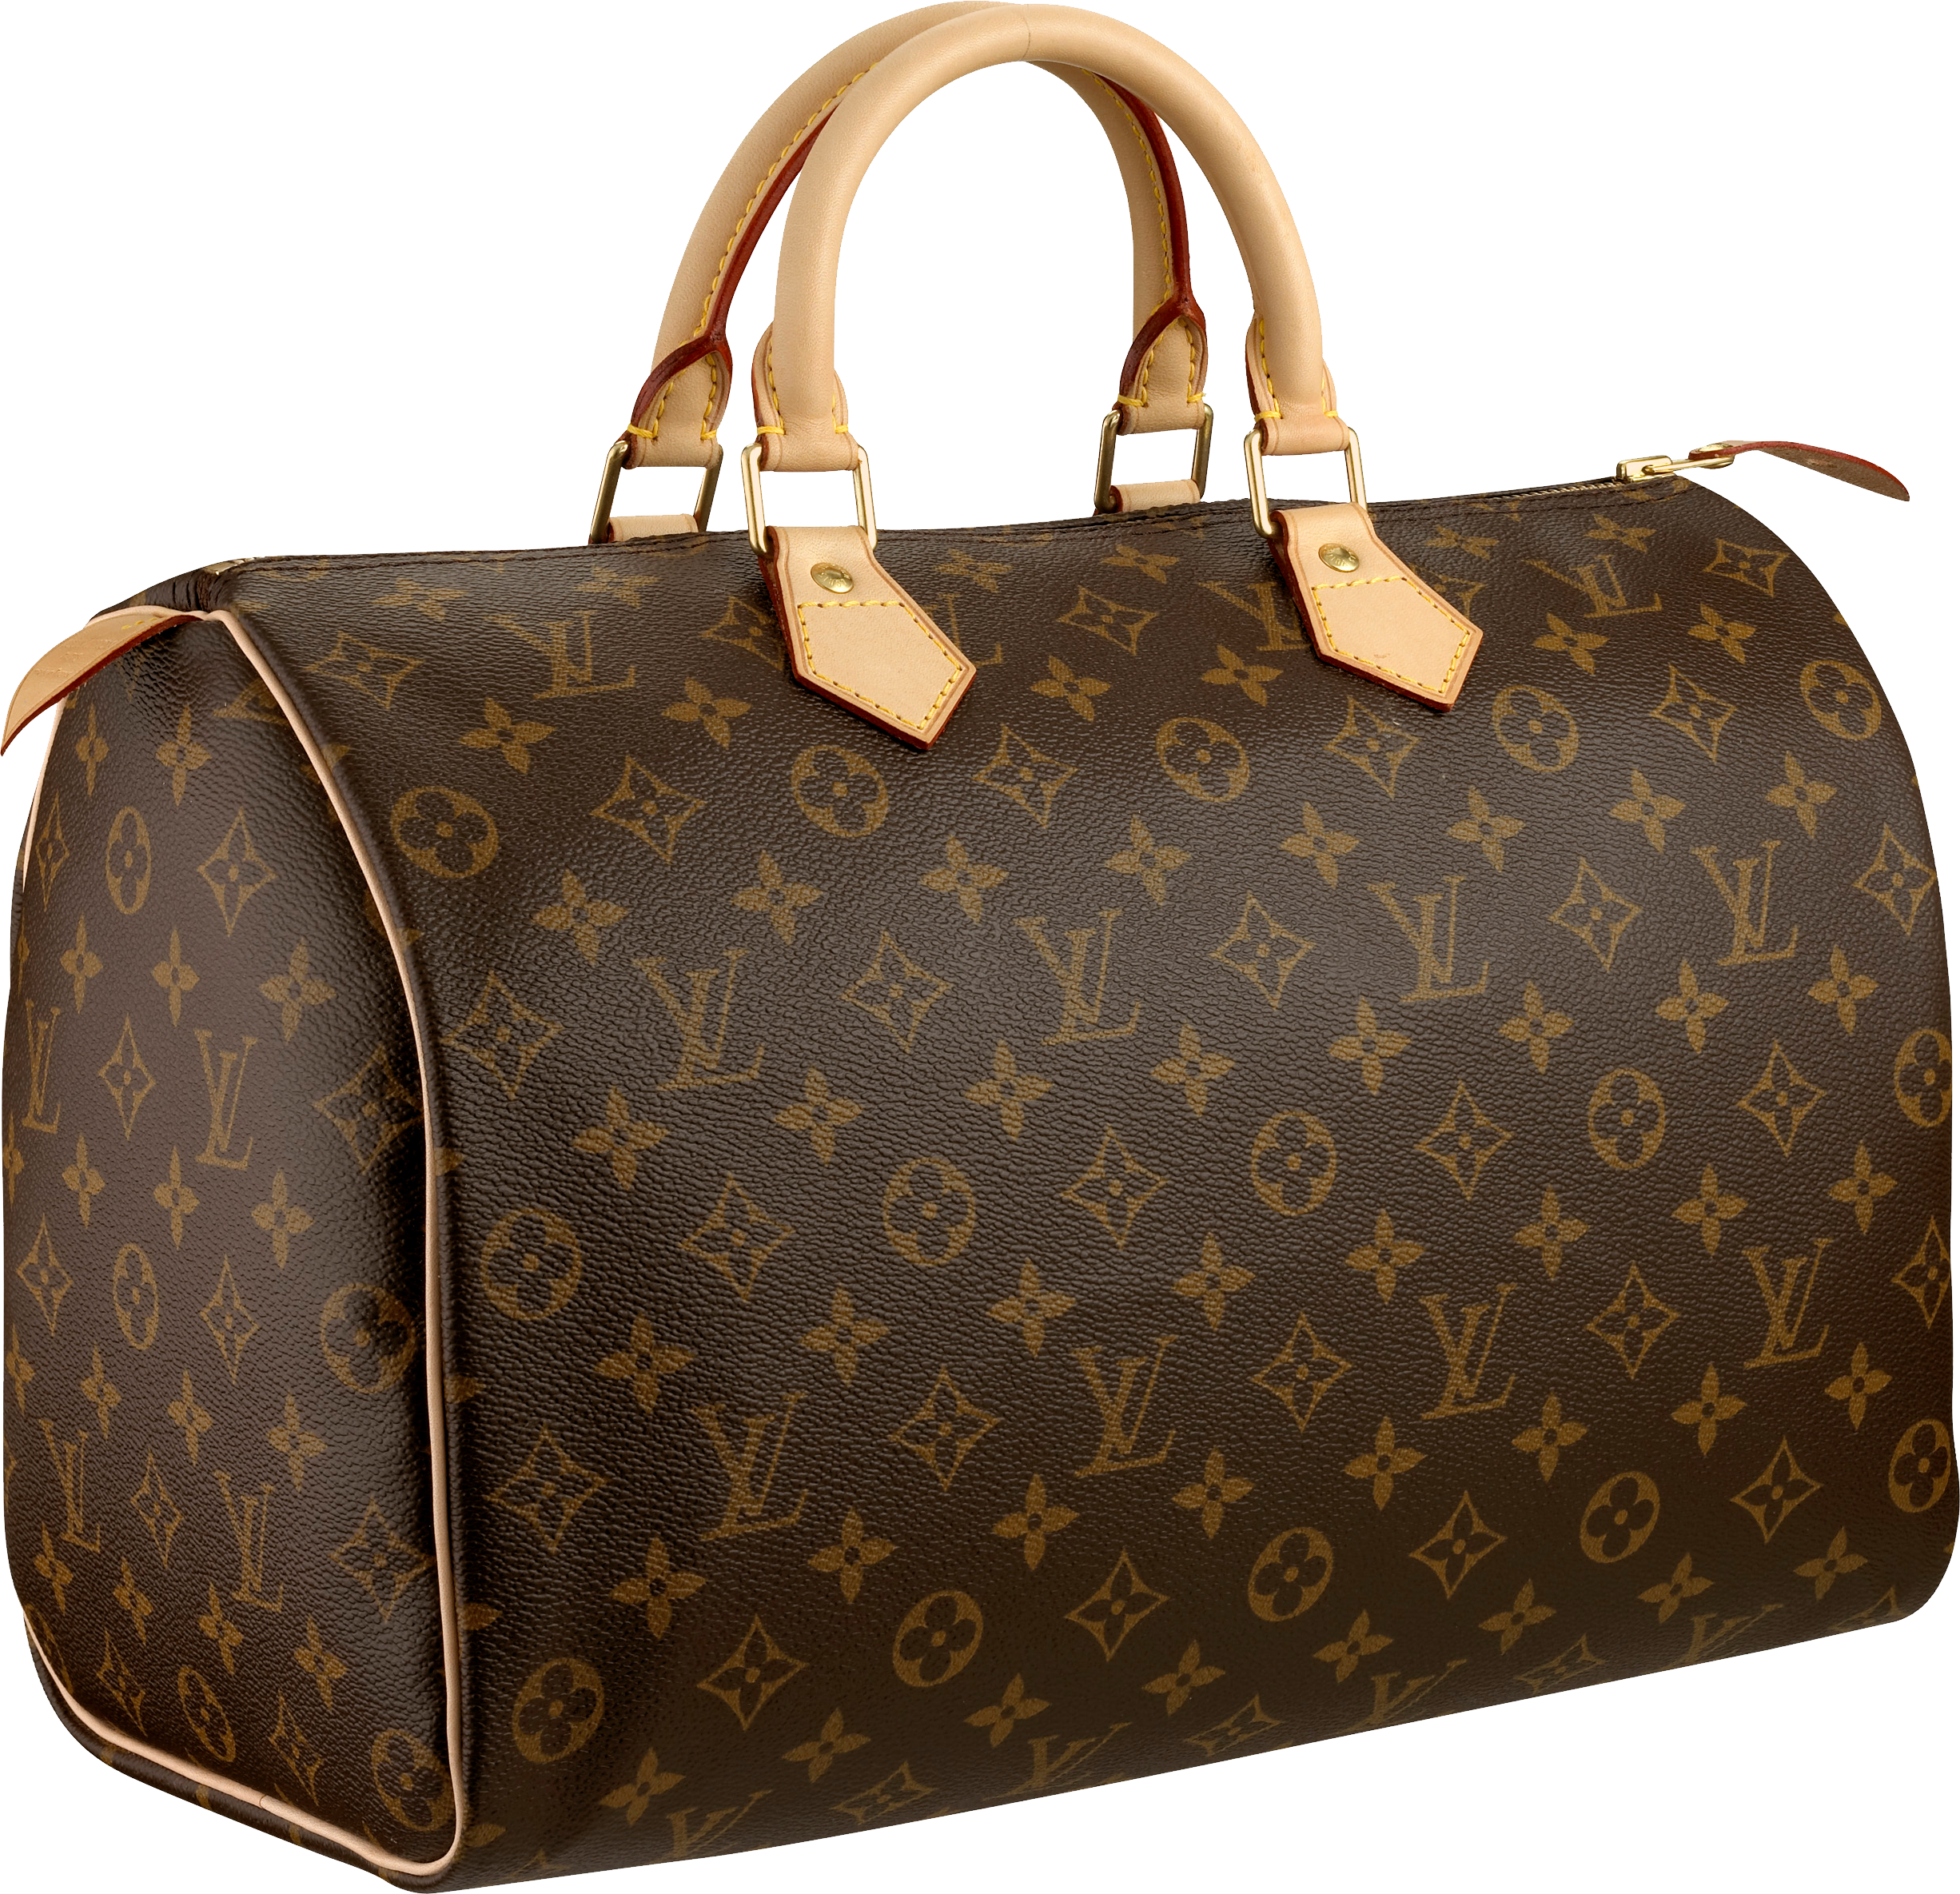 Vuitton Goods Louis Bag Fashion Luxury Handbag PNG Image